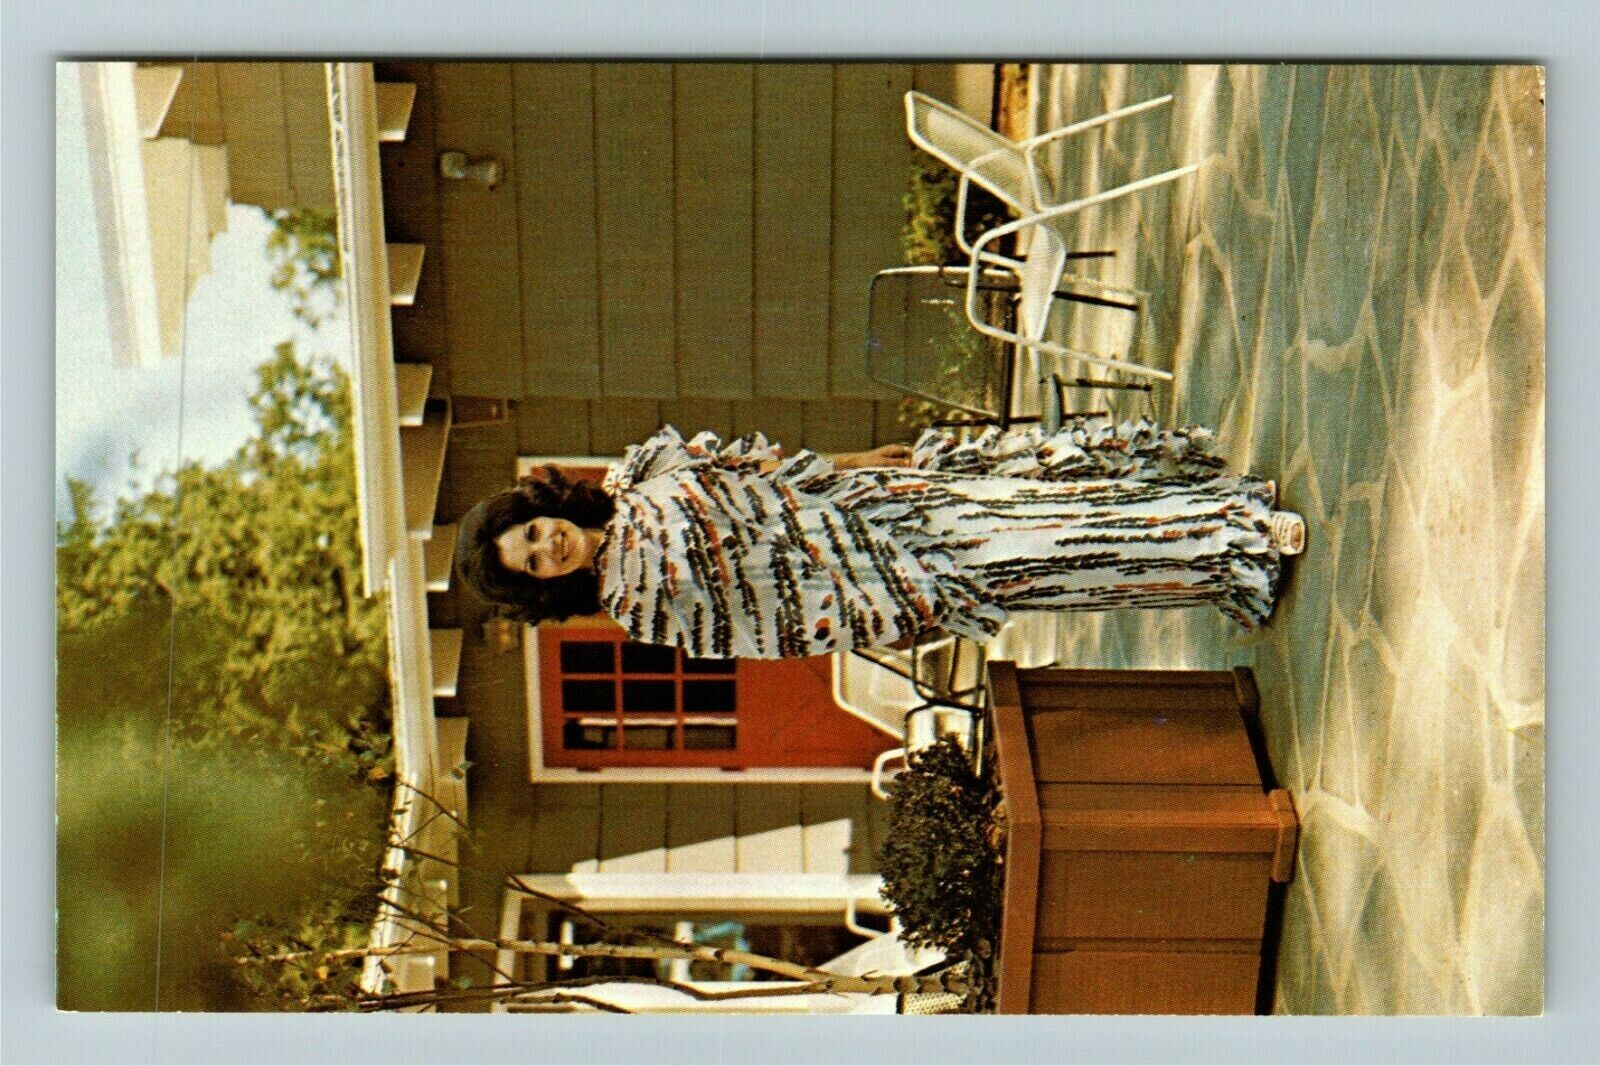 Hawley PA-Pennsylvania, Woodloch Pines Resort, Patio and Lady, Vintage Postcard